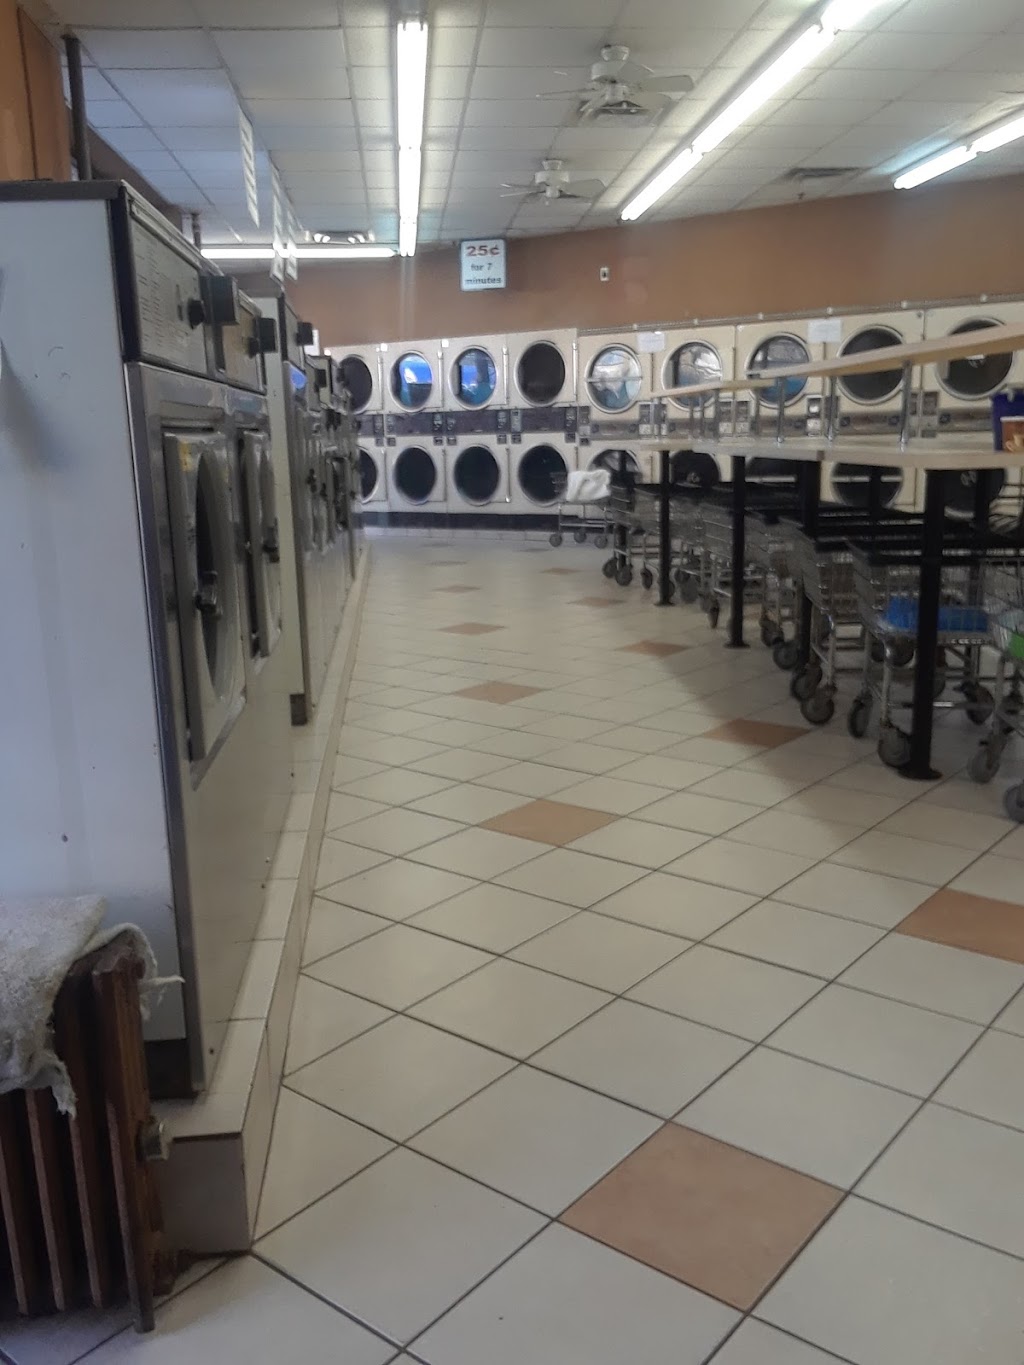 Belmont Laundry Center | 2340 Belmont Ave, Bronx, NY 10458 | Phone: (718) 295-4604